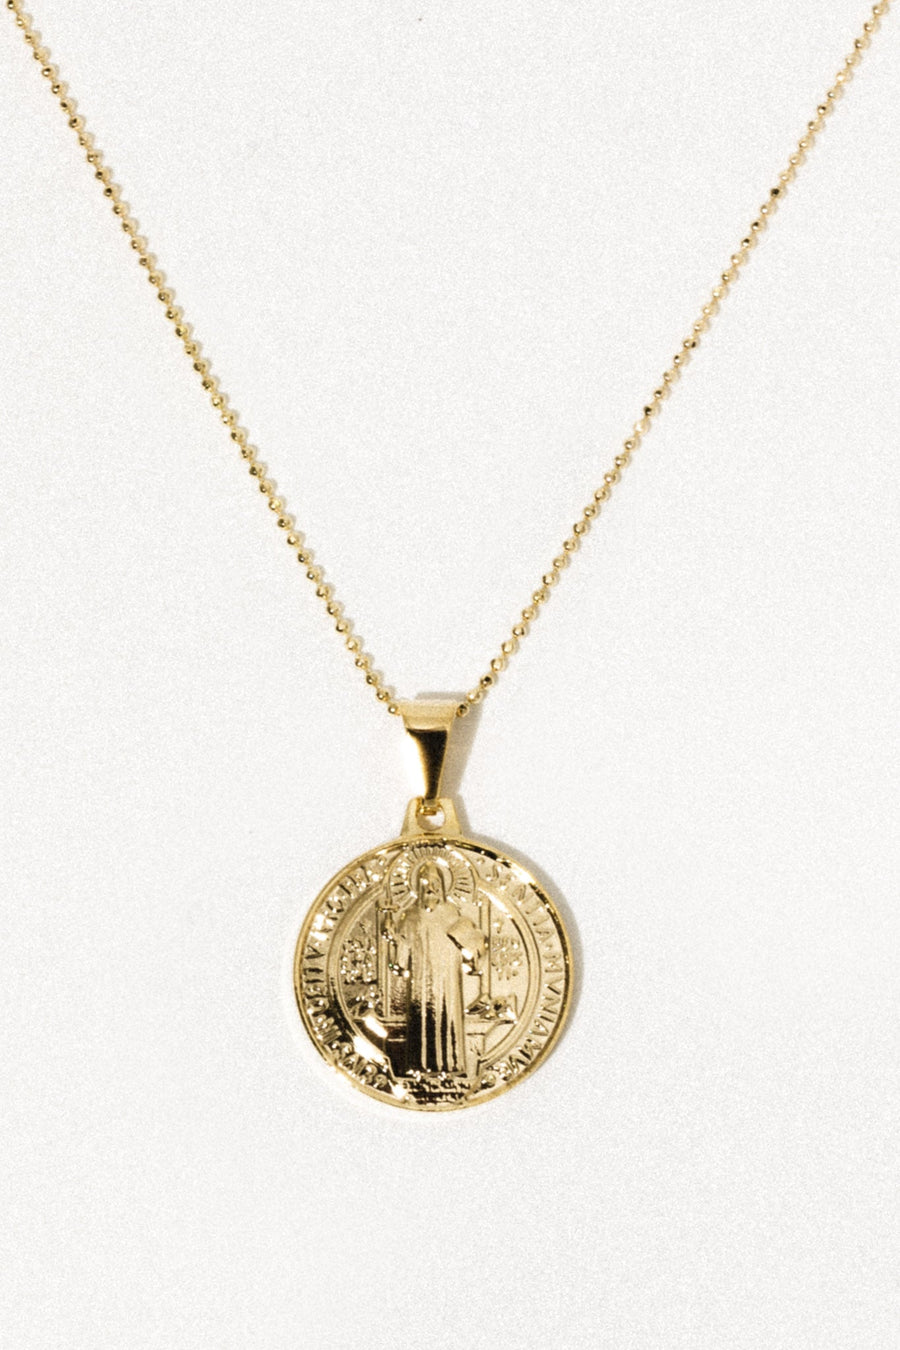 Dona Italia Jewelry Gold / 20 Inches Holy Traveler Necklace